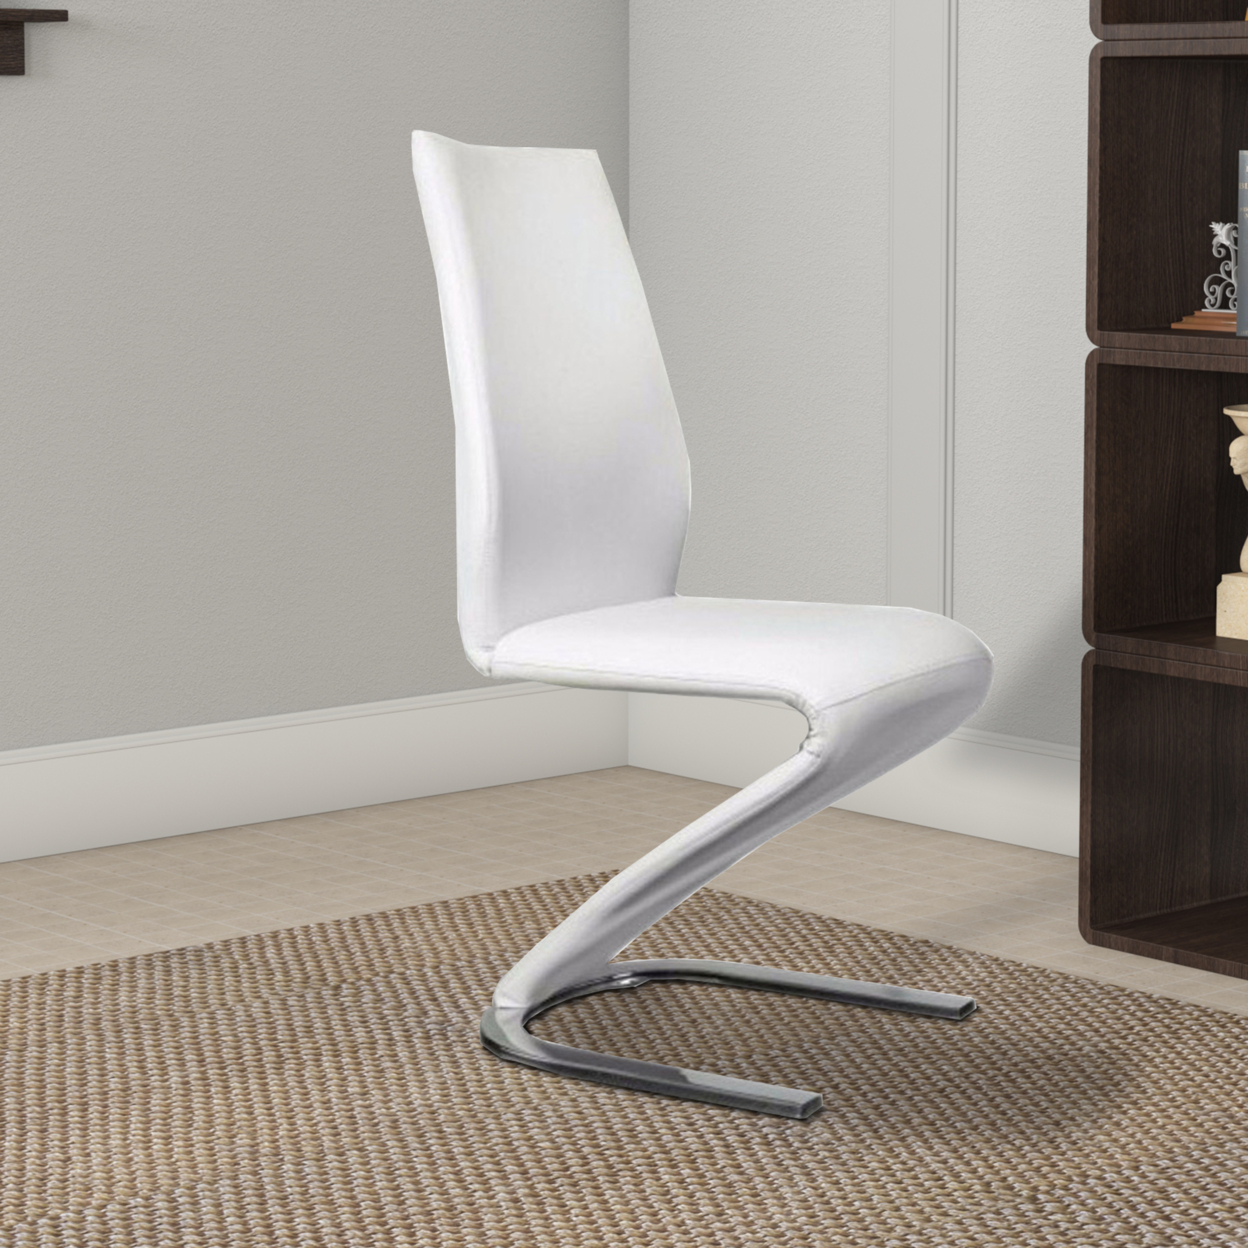 Leatherette Side Chair With U Shaped Metal Base, Set Of 2, White And Chrome- Saltoro Sherpi